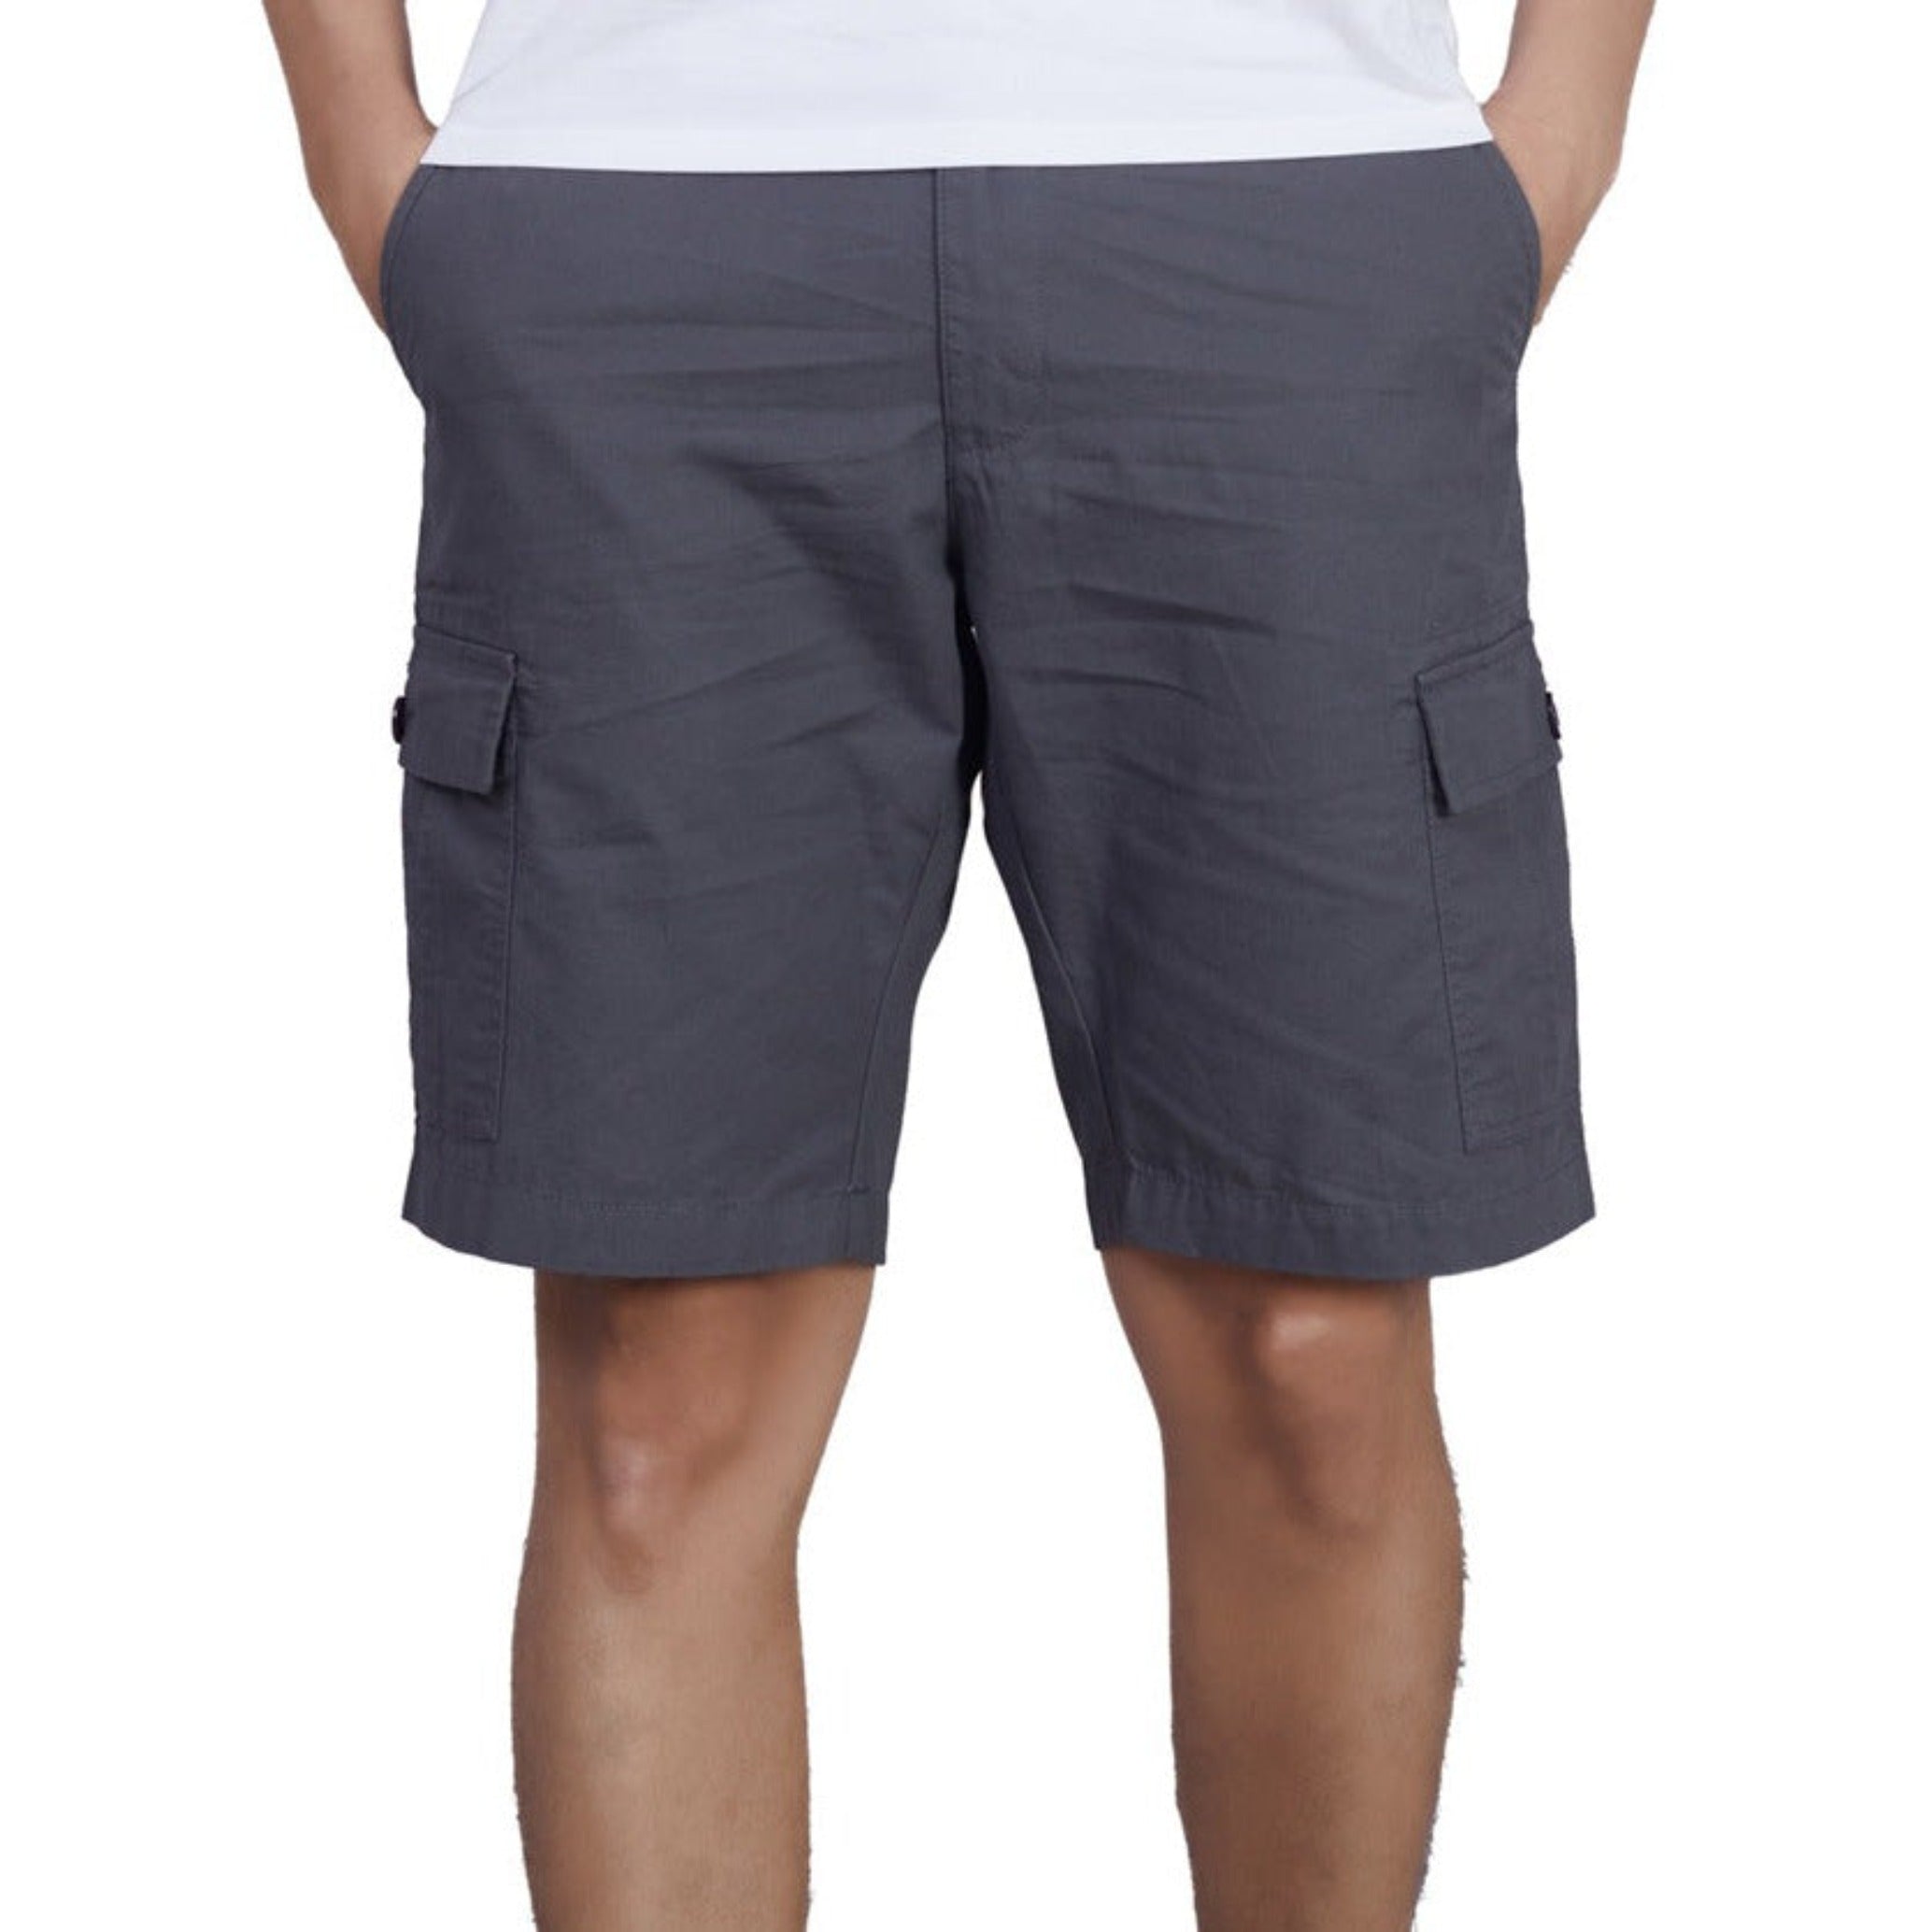 Buy Gokyo Corbett Outdoor Cargo Shorts Dark Grey | Shorts at Gokyo Outdoor Clothing & Gear